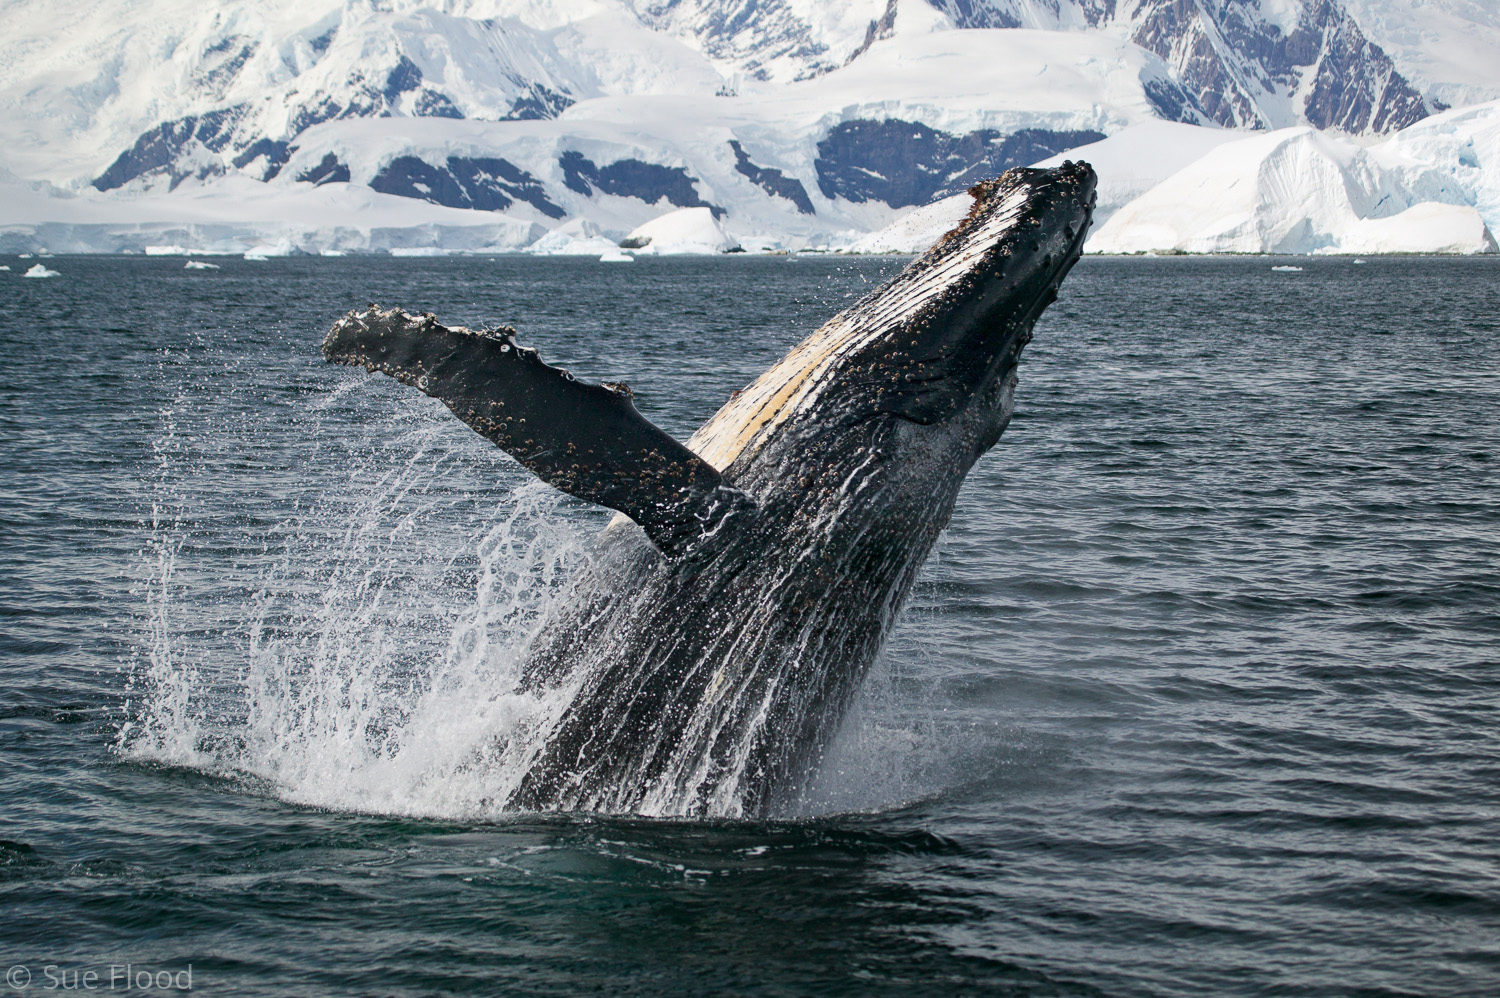 Breaching humpback whale, Wilhemina Bay, Antarctic peninsula